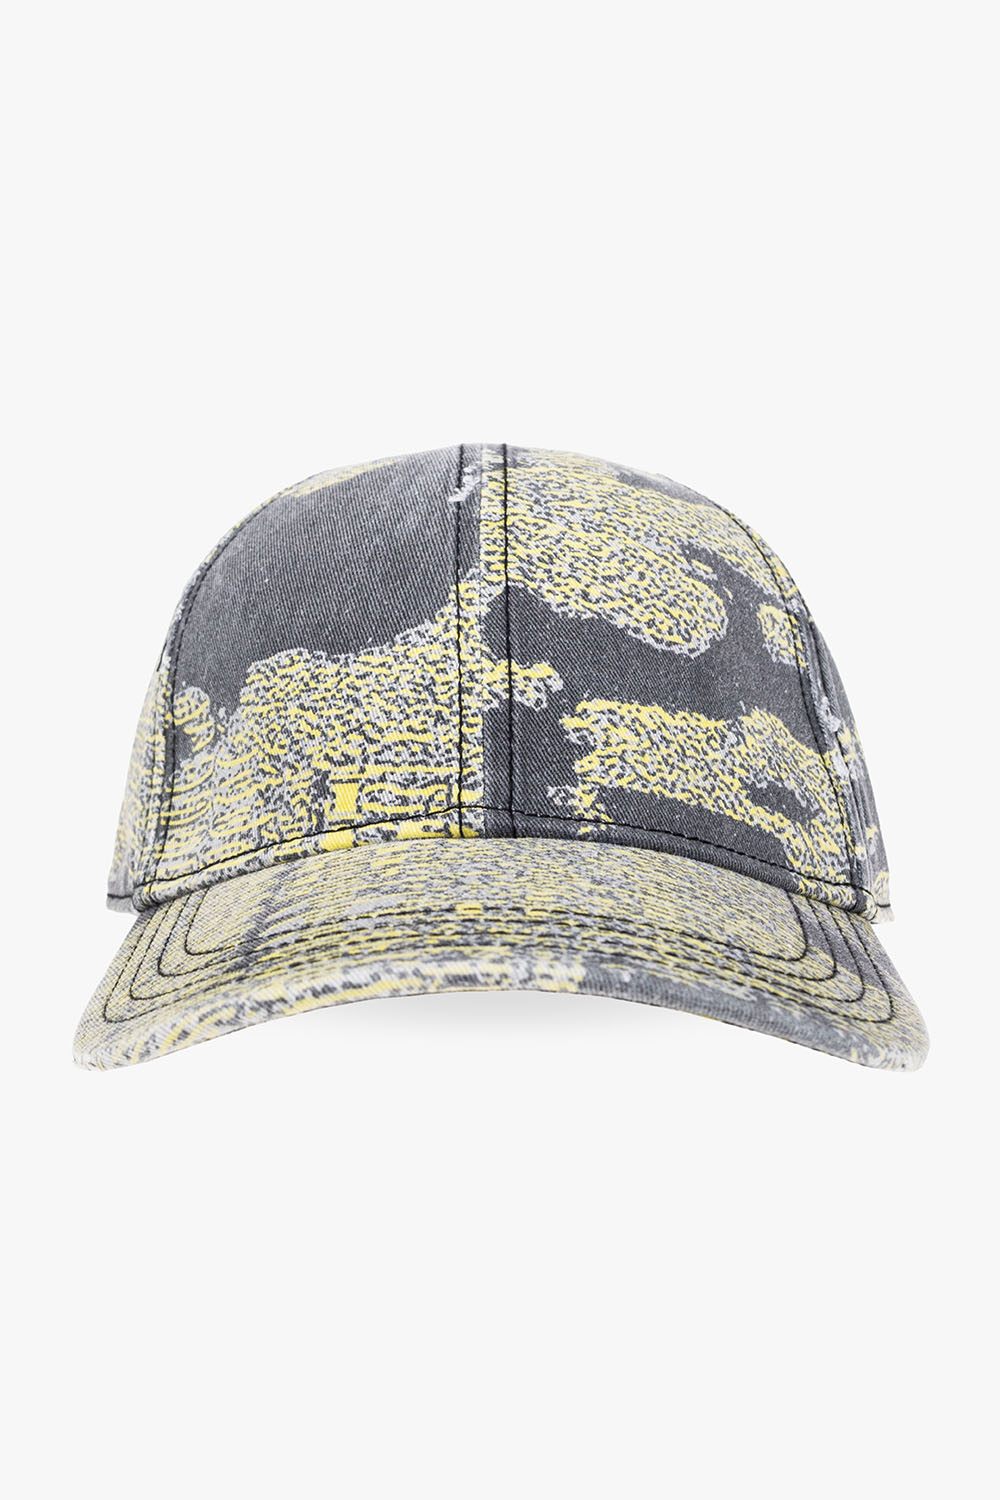 Diesel ‘C-IZDARD’ baseball cap